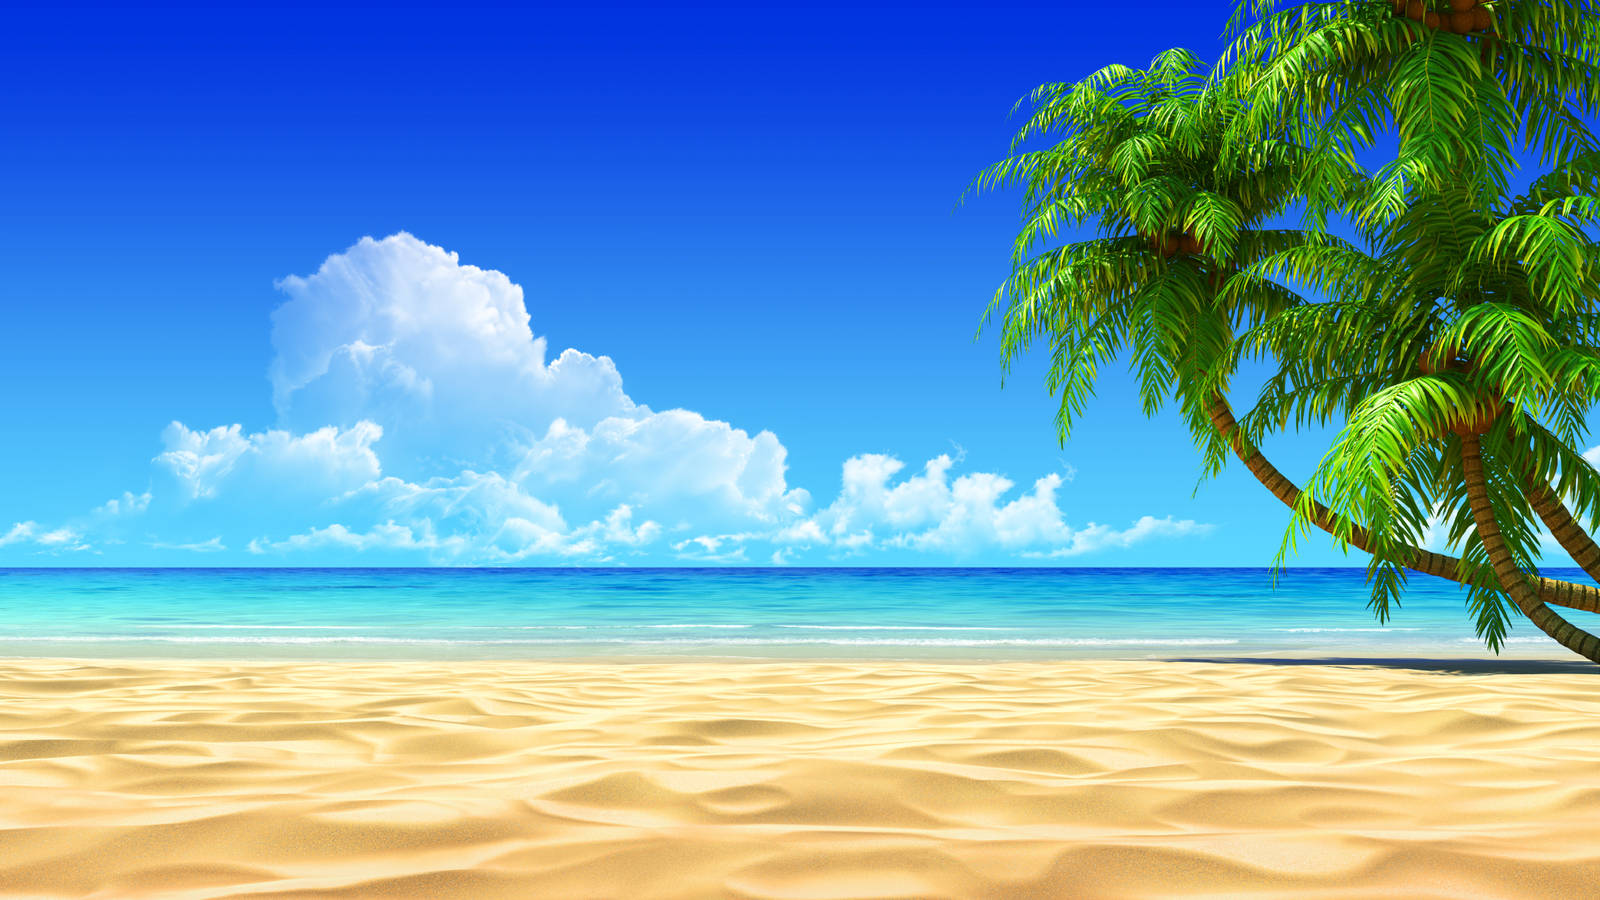 Digital Art Beach Desktop Picture